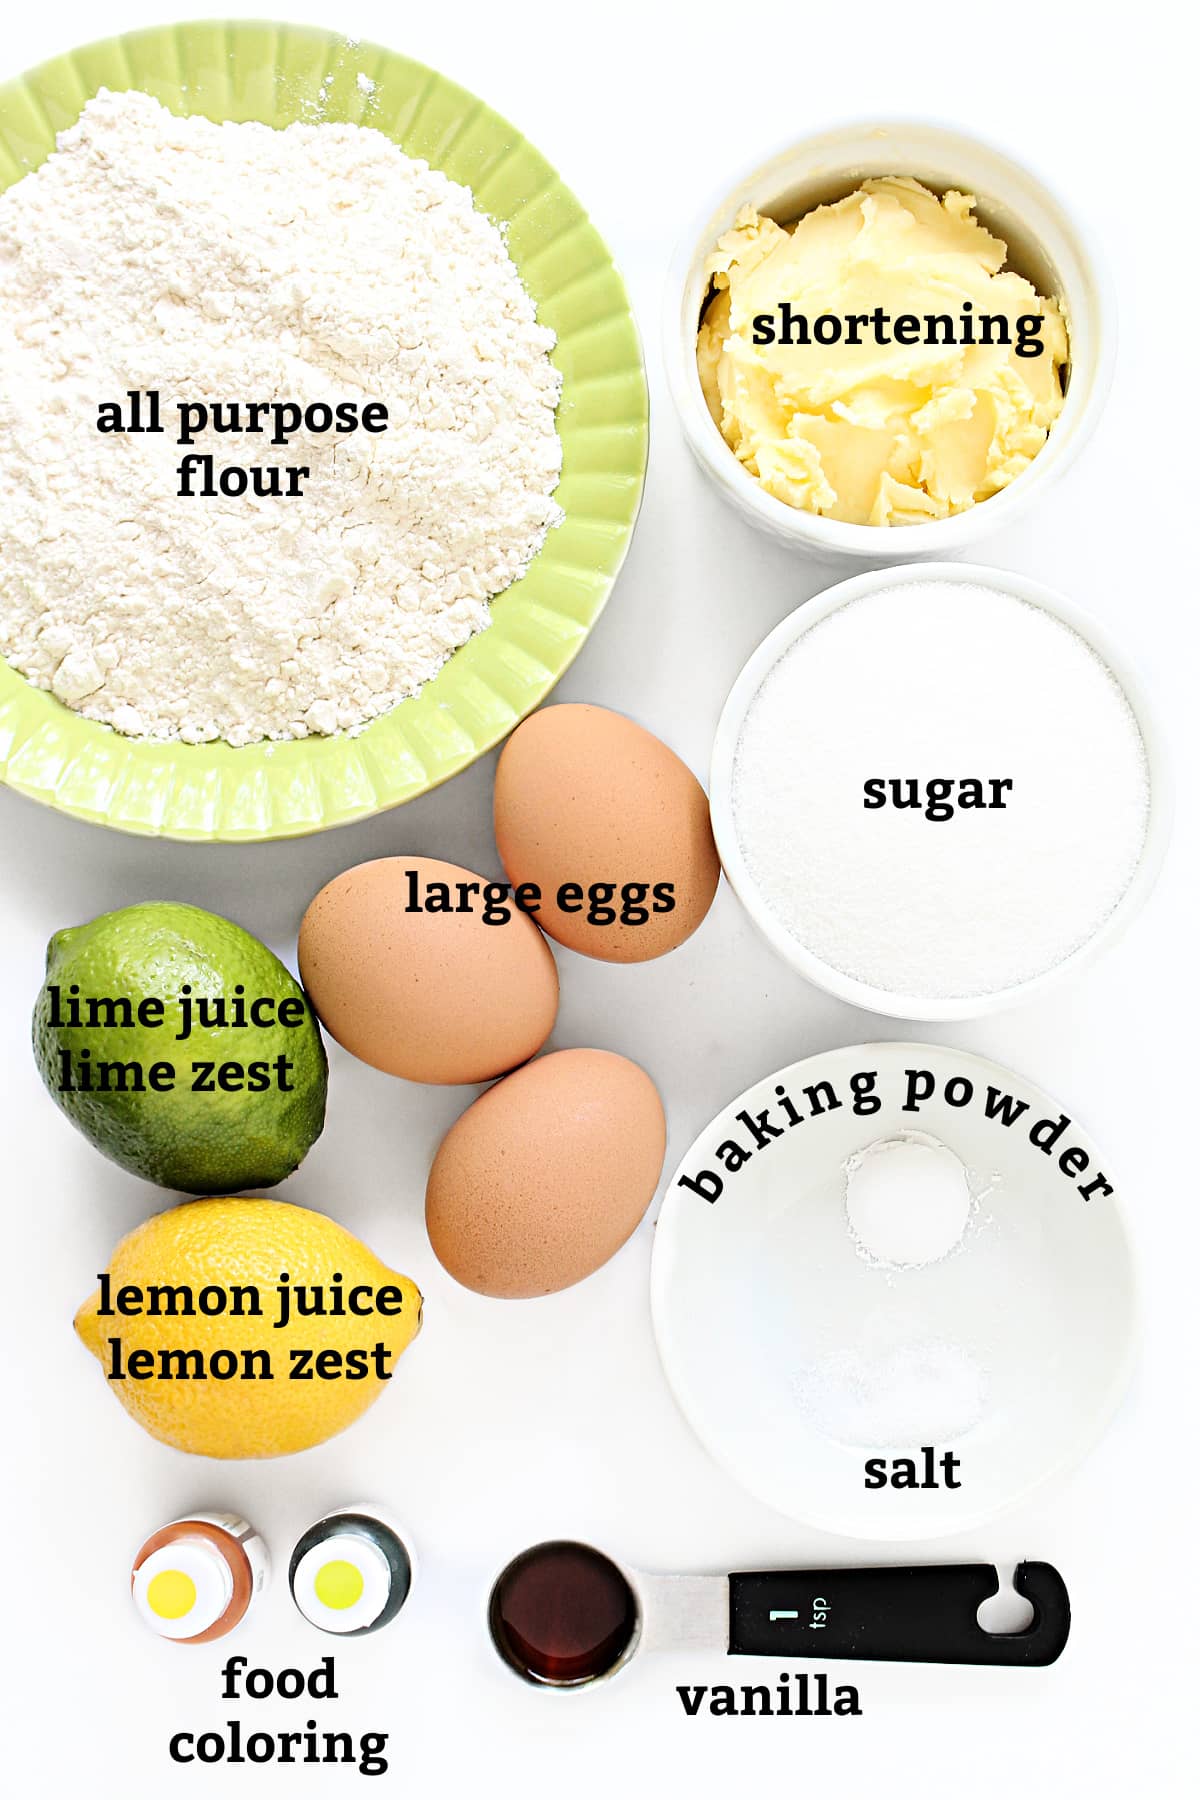 Ingredients: flour, shortening, sugar, eggs, lime zest/juice, lemon zest/juice, baking powder, salt, vanilla, coloring.